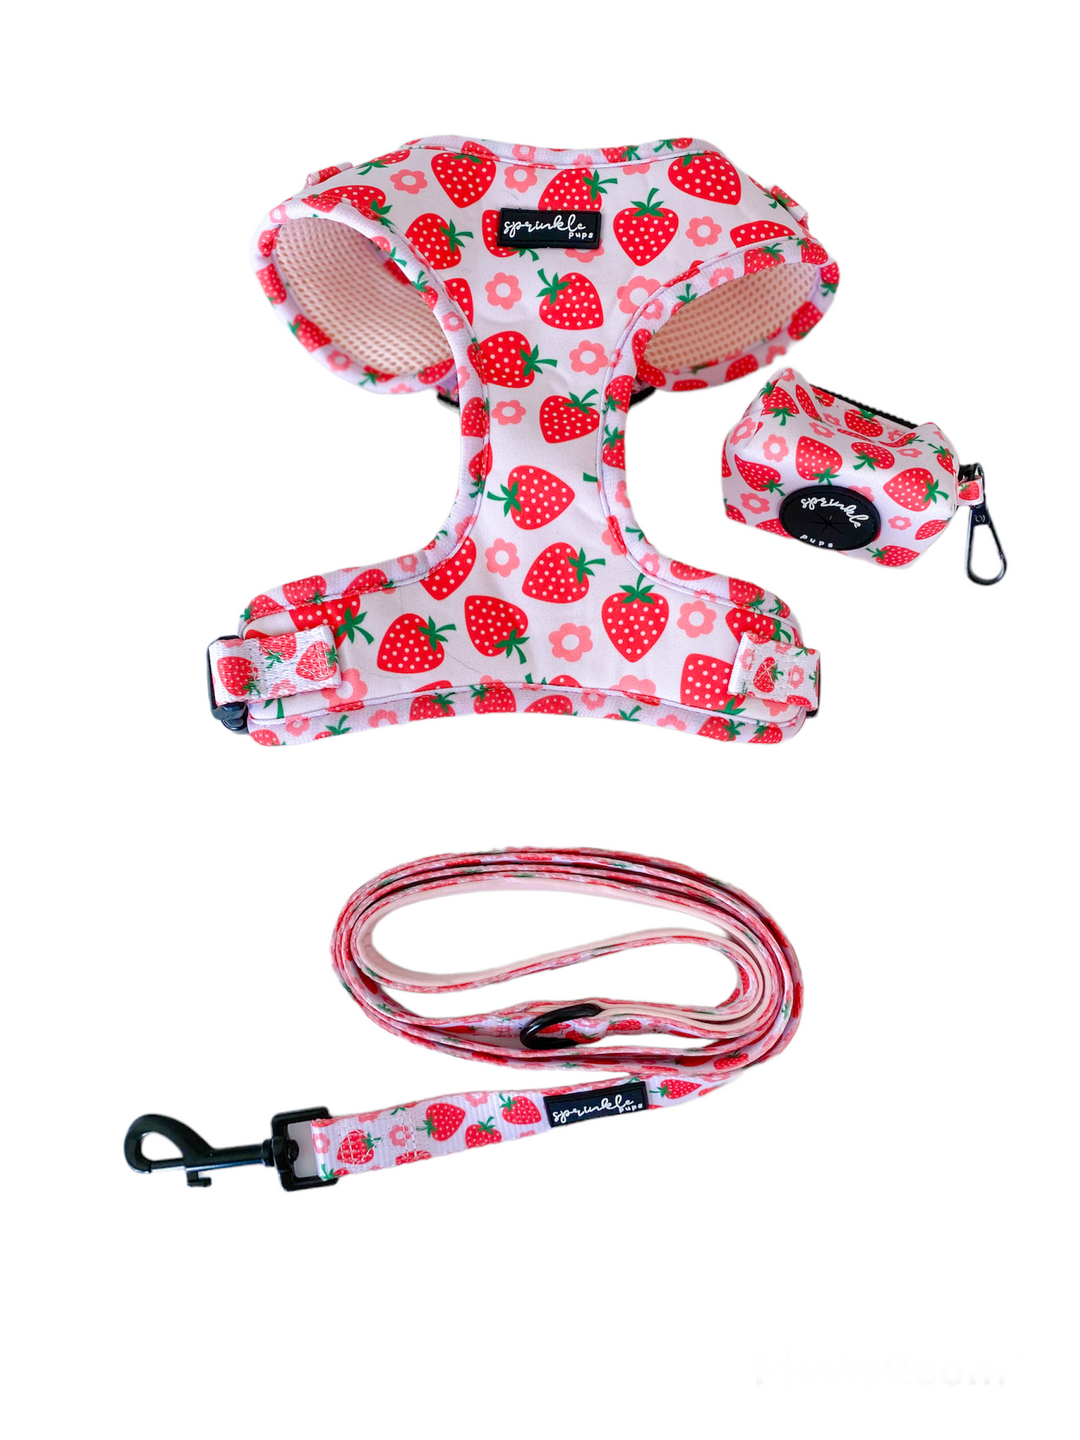 Matching Adjustable Dog Harness, Leash, Poo Bag Set - Strawberry Shortcake